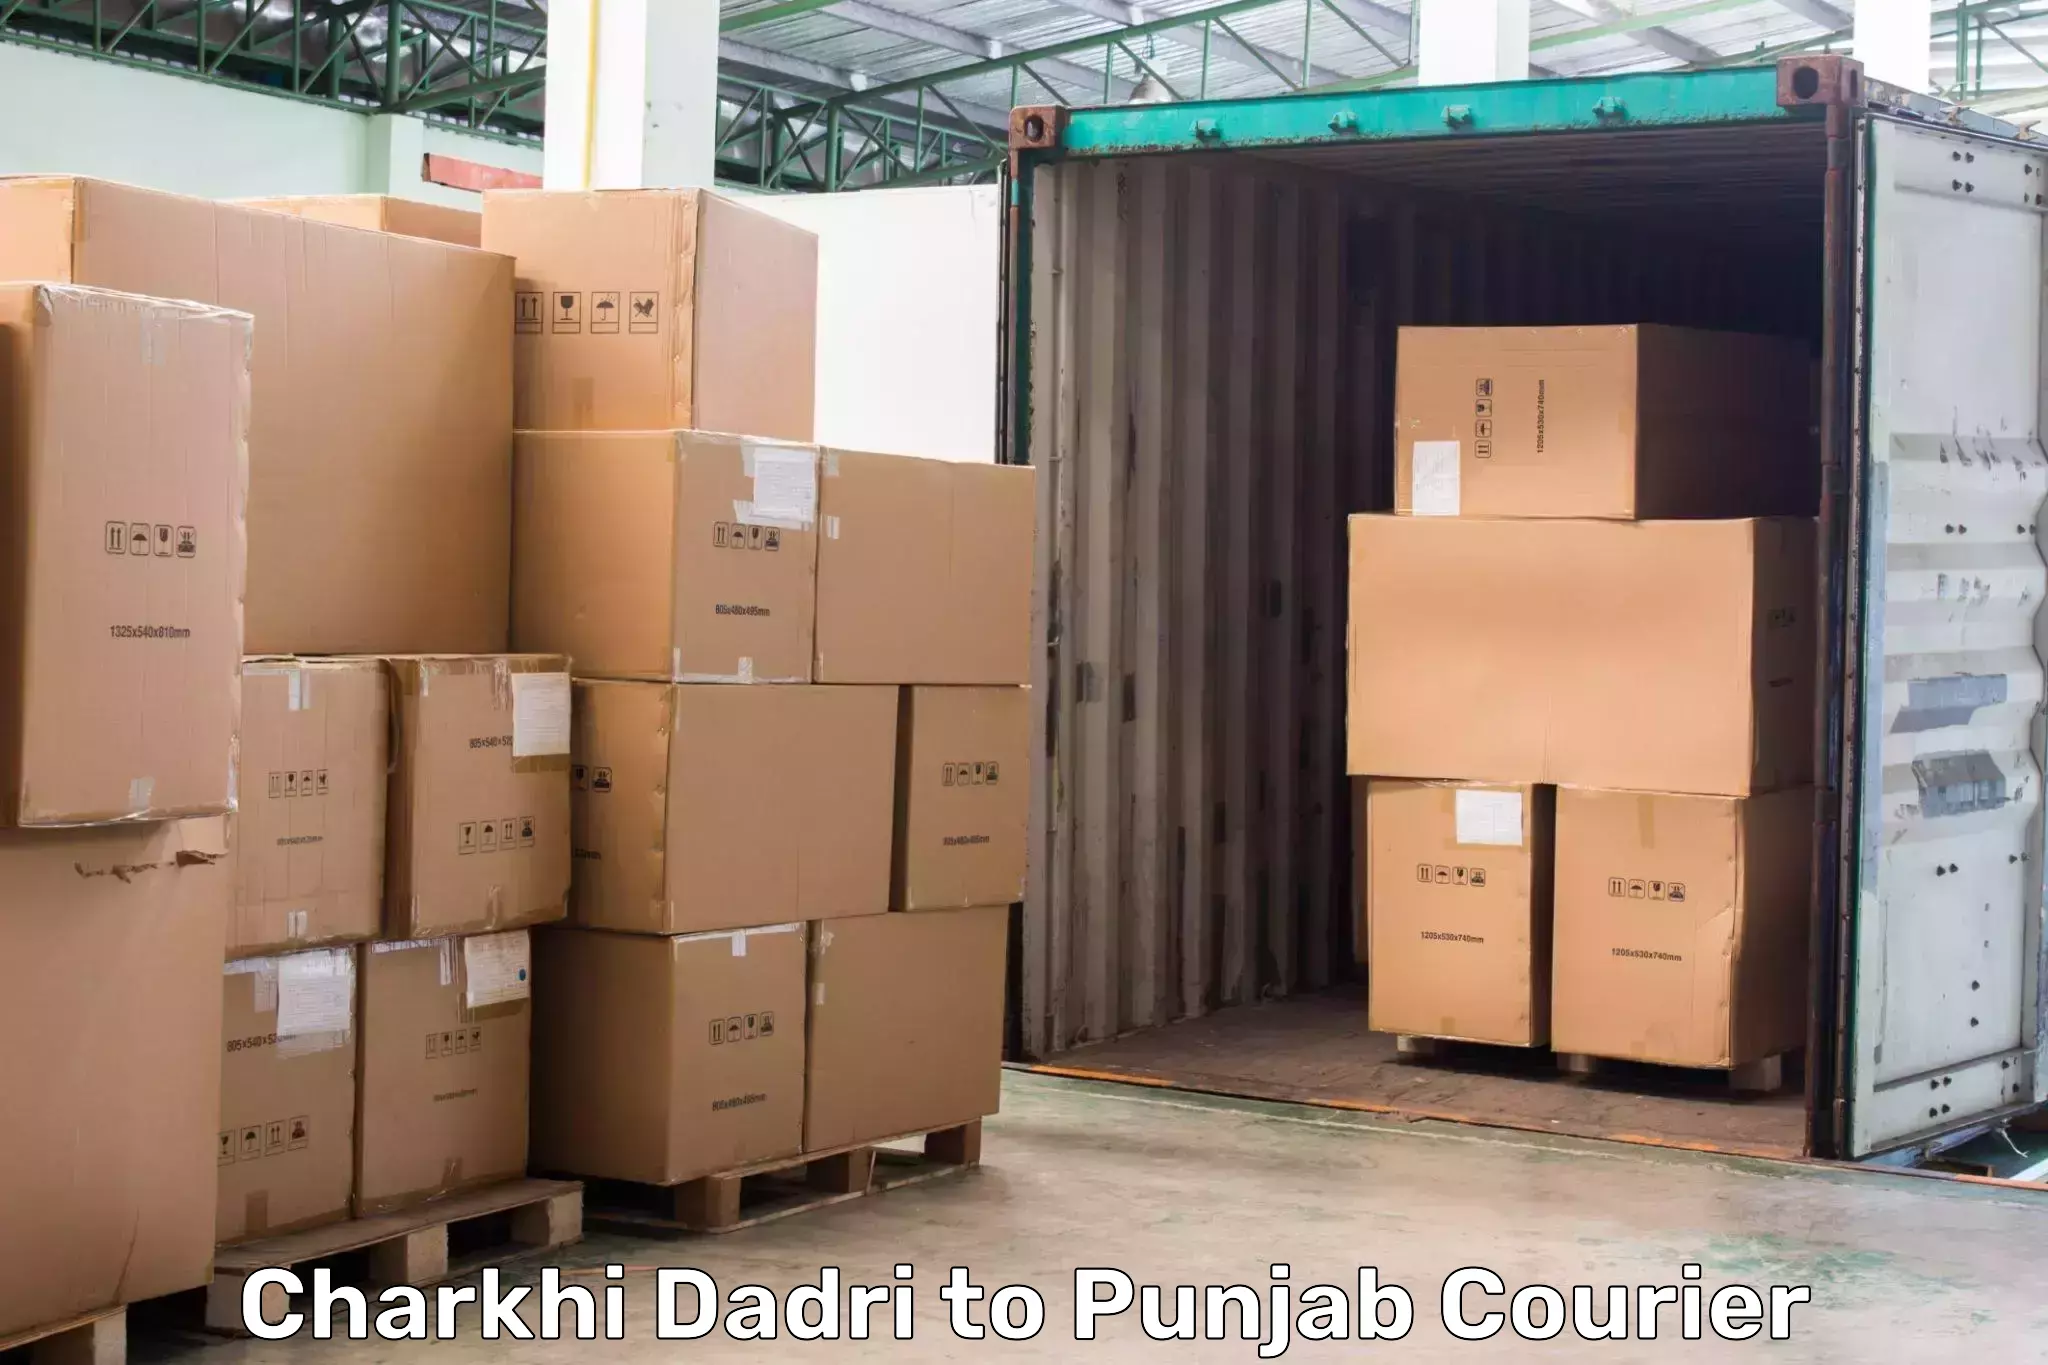 Express delivery network Charkhi Dadri to Punjab